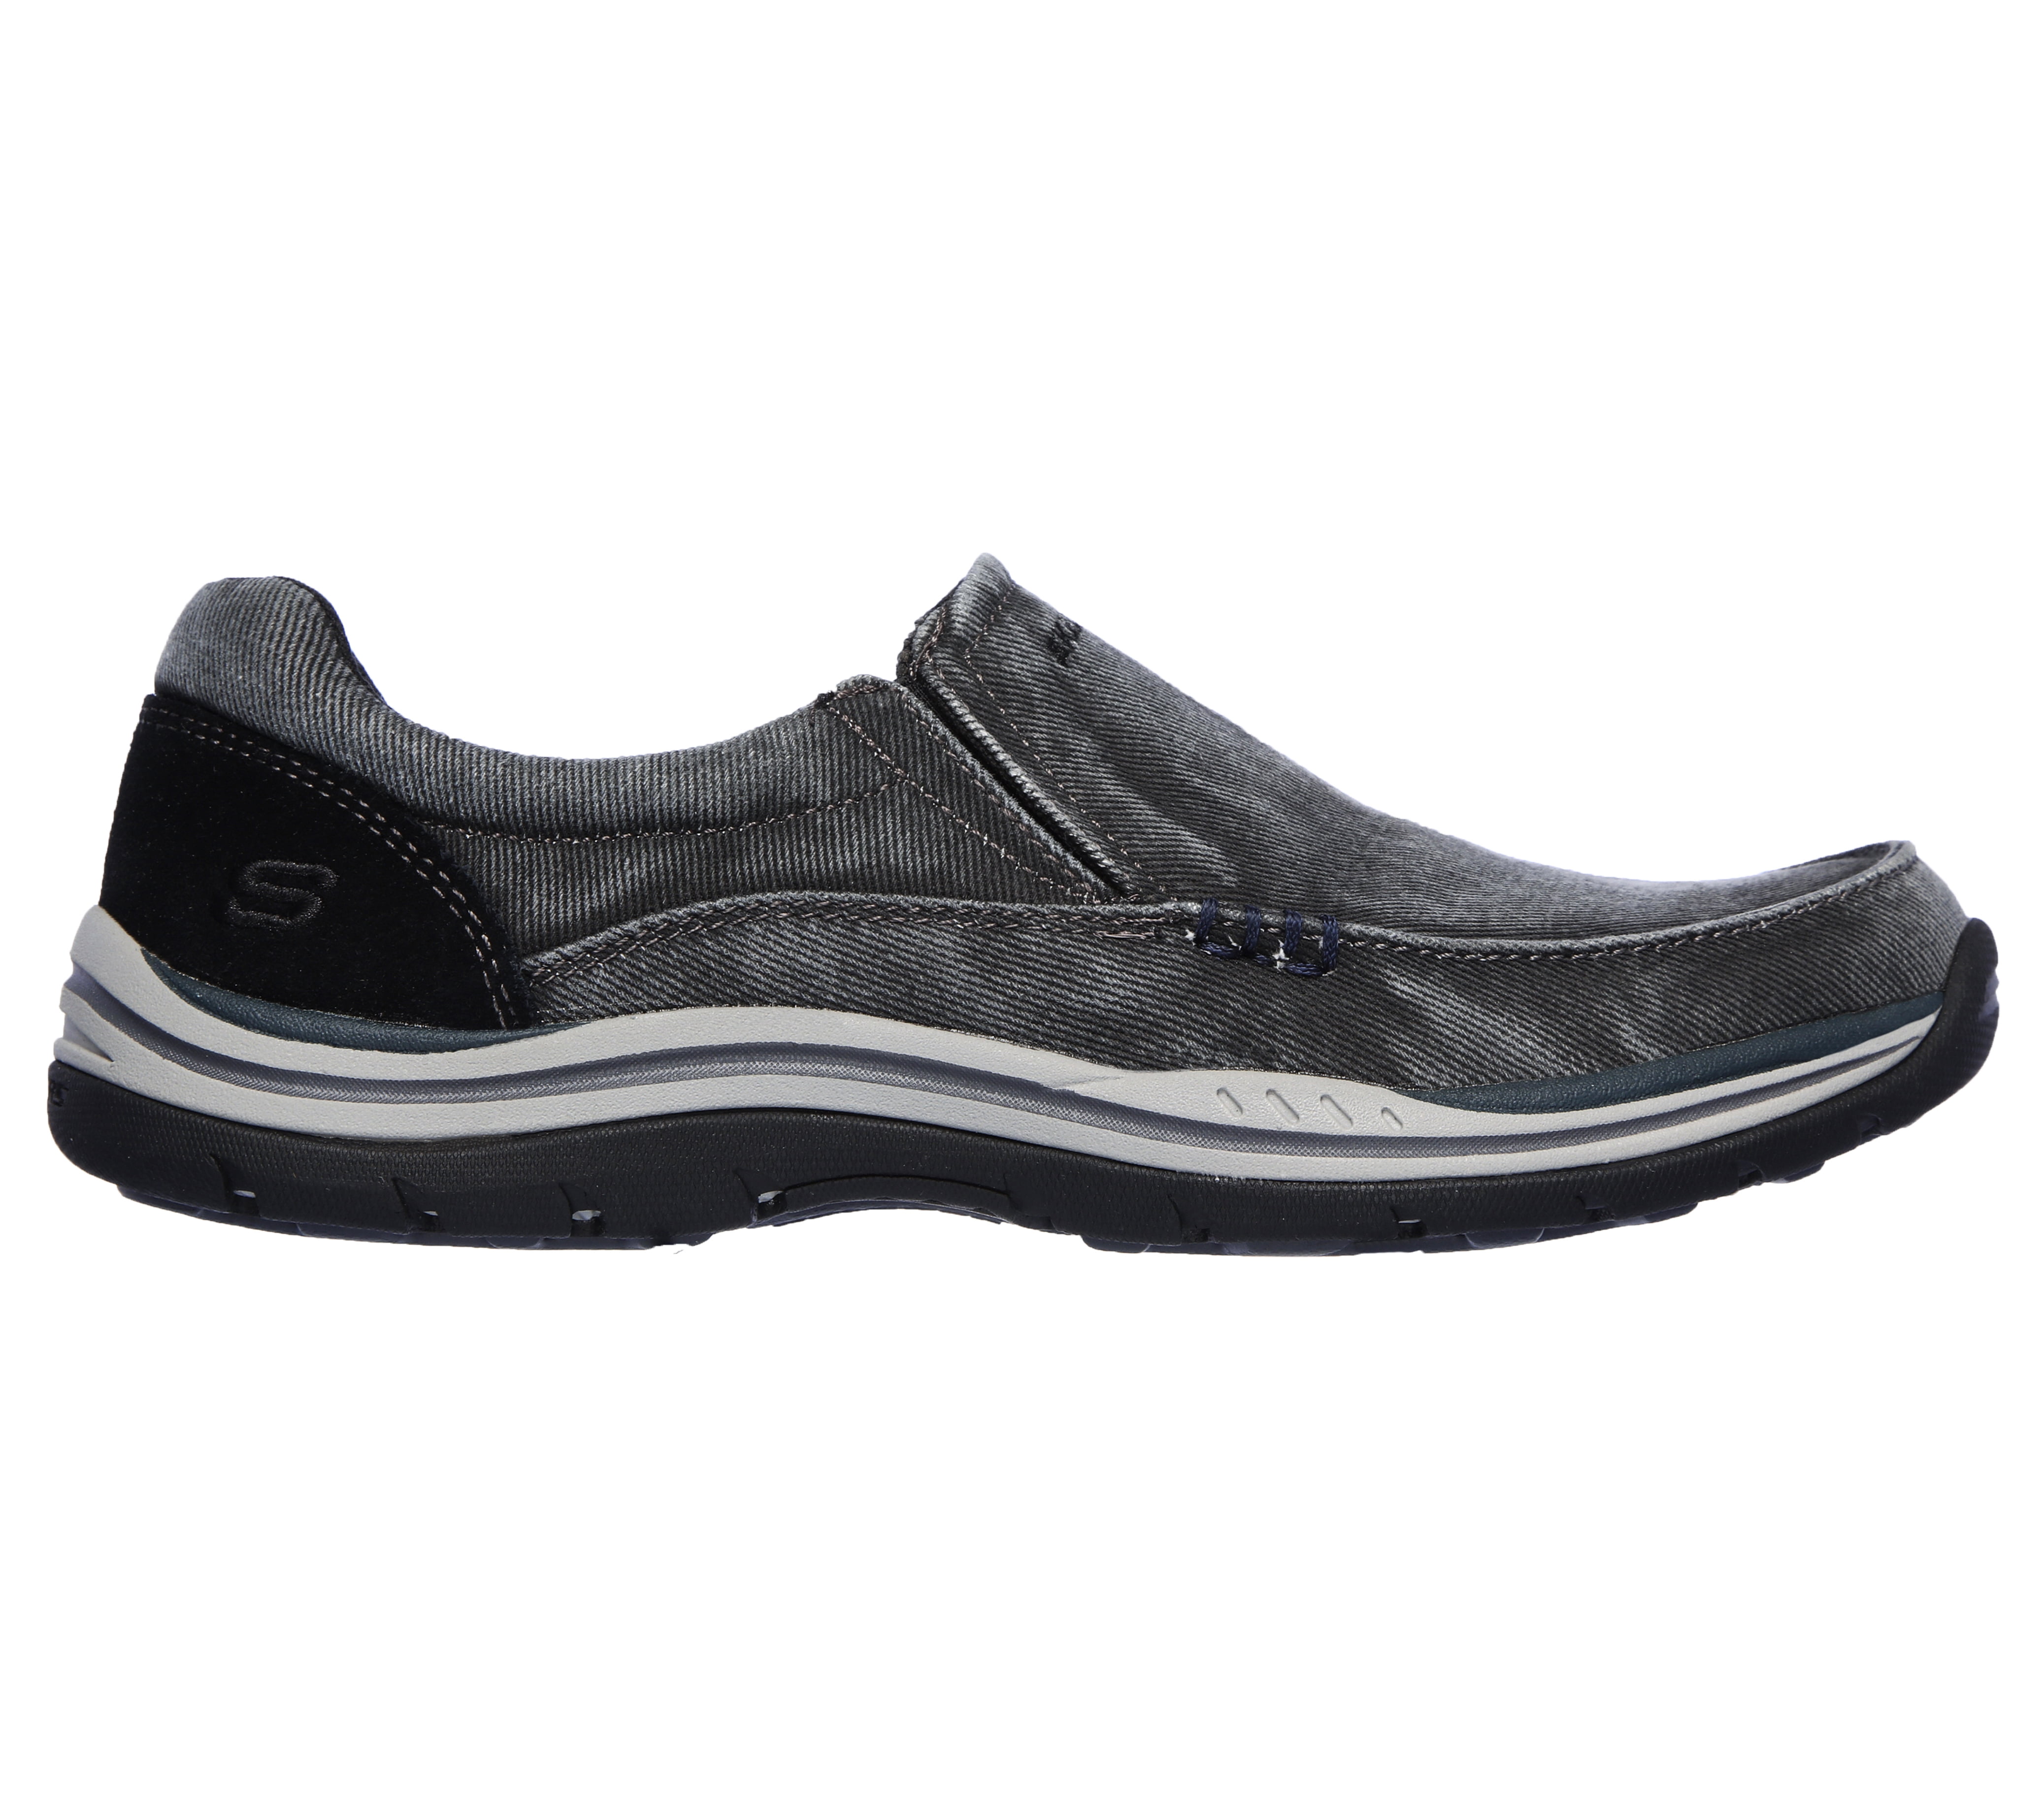 Skechers Expected Avillo Moccasins Mens Size 8.5 Khaki Slip On Shoes SN64109 GUC